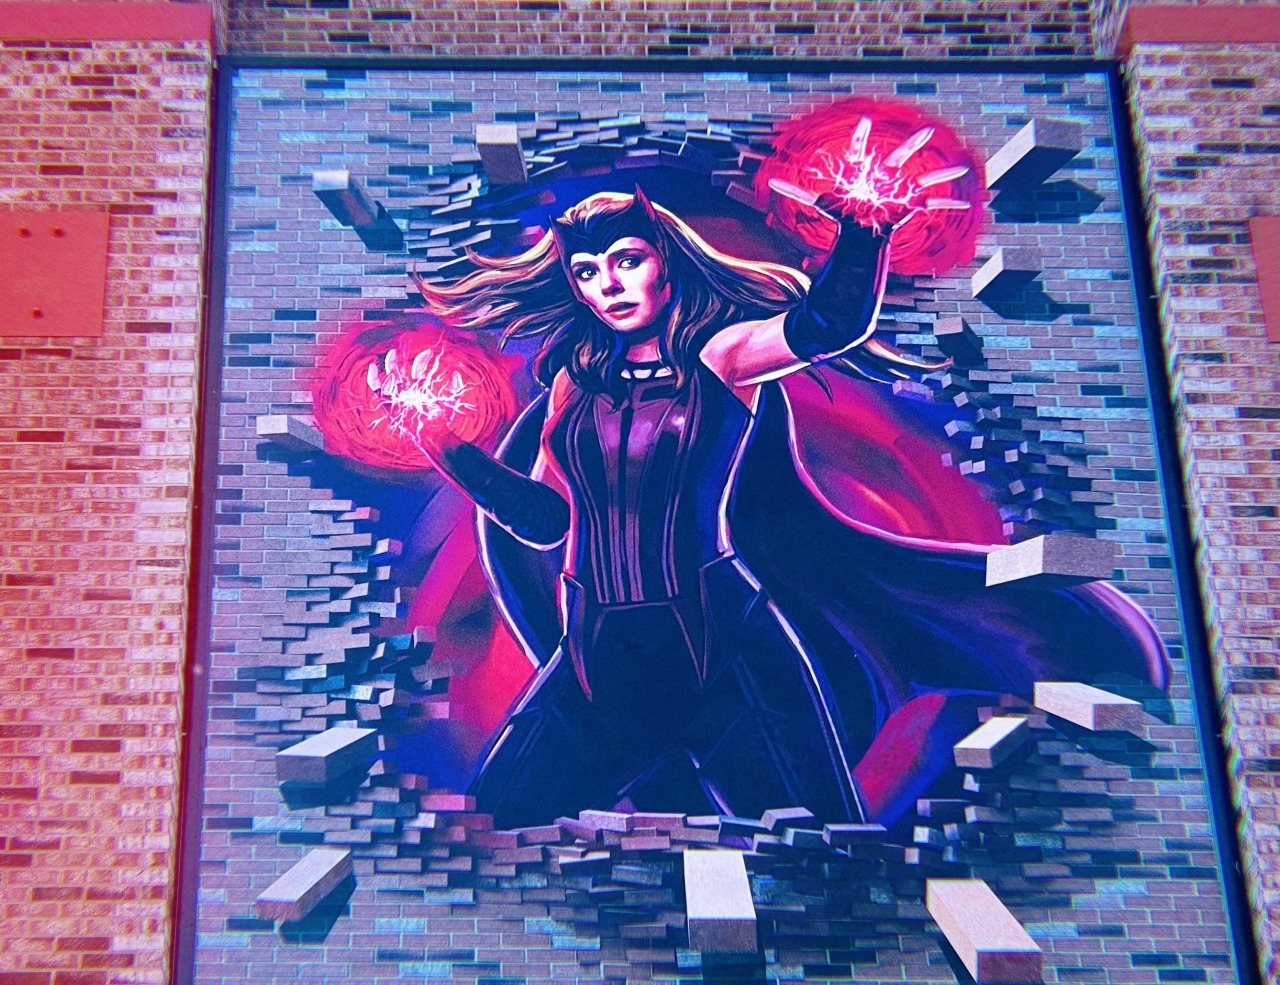 WandaVision art in Downtown Disney ∞ #upload#disneyland#disney#downtown disney#art#wandavision#scarlet witch#mcu#marvel#superhero